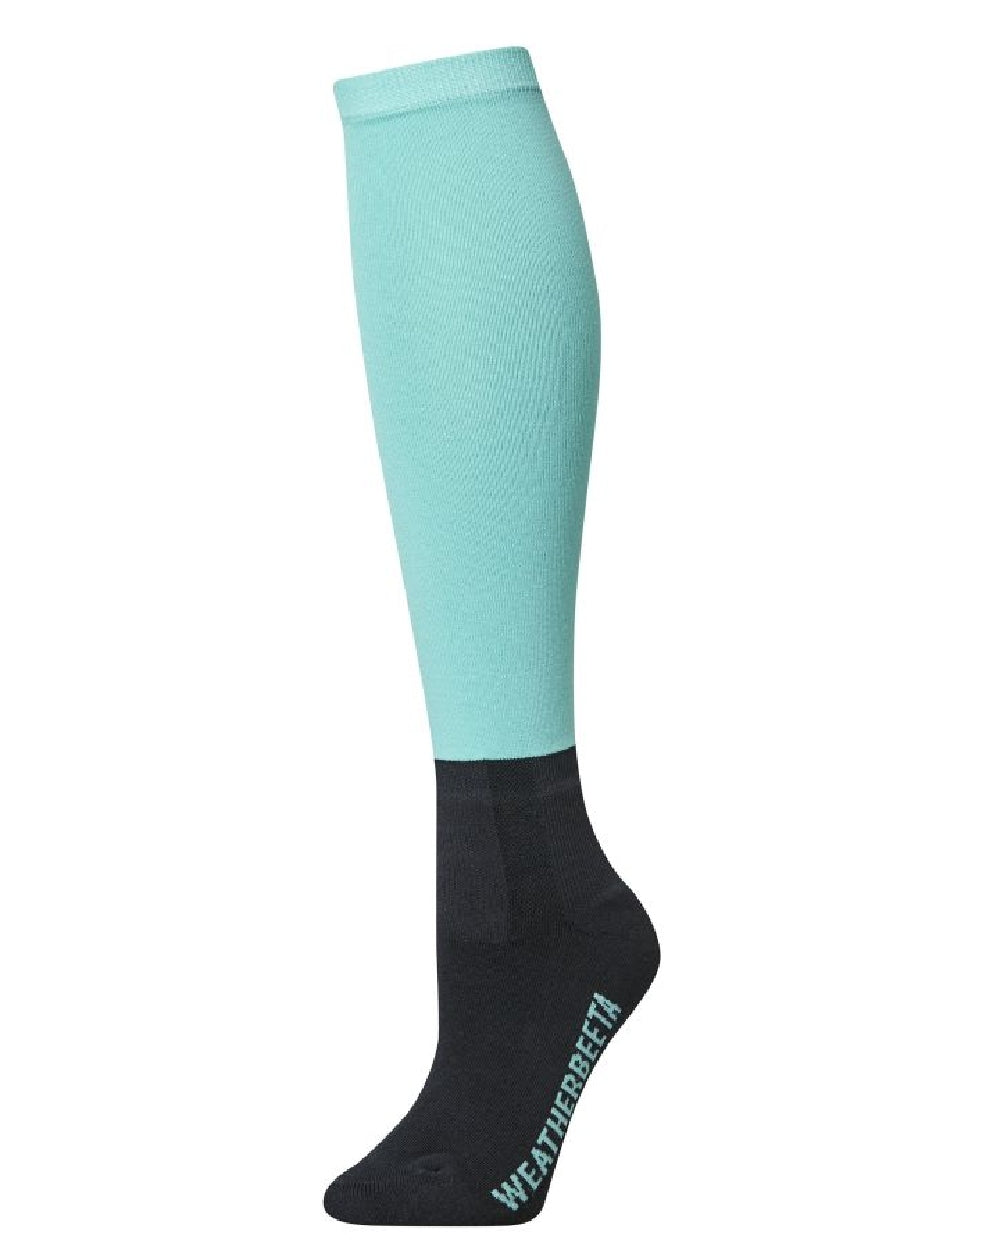 WeatherBeeta Prime Stocking Socks in Turquoise 